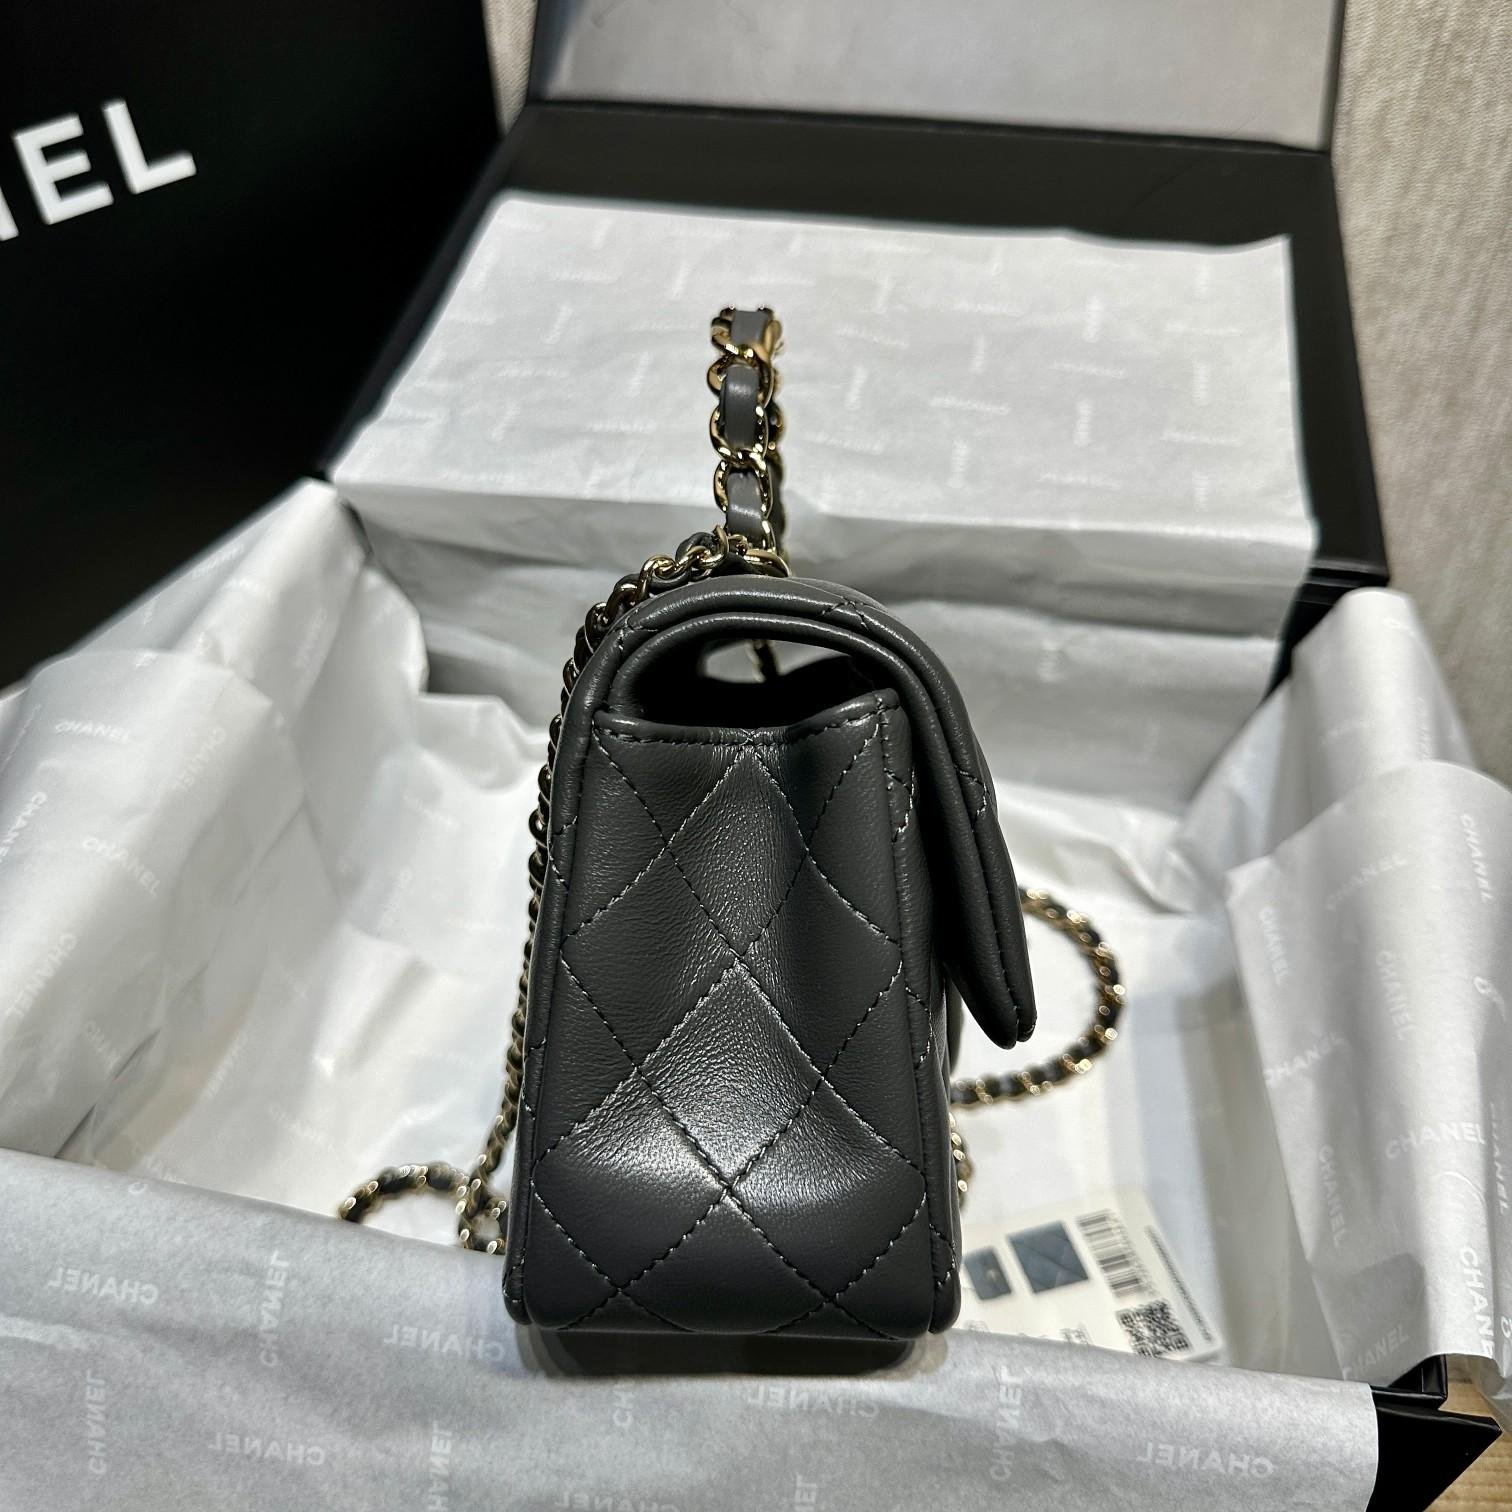 New Arrival        Handbags CF Mini        Bag Fashion Bag Valentine Gifts 5